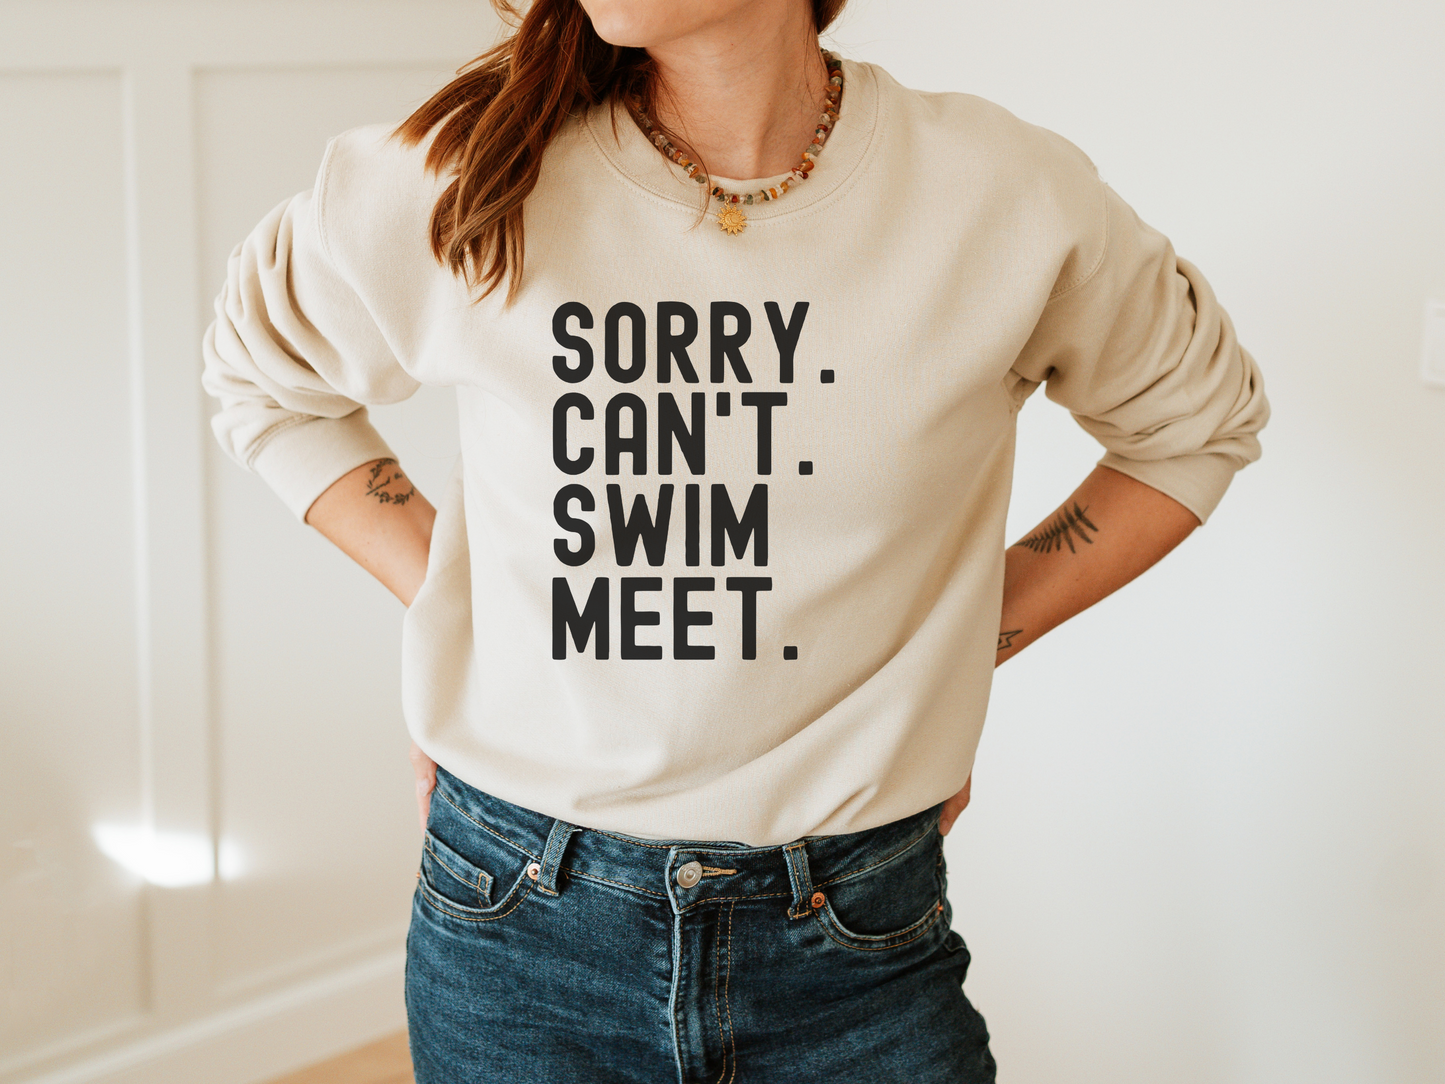 Sorry. Can't. Swim Meet.